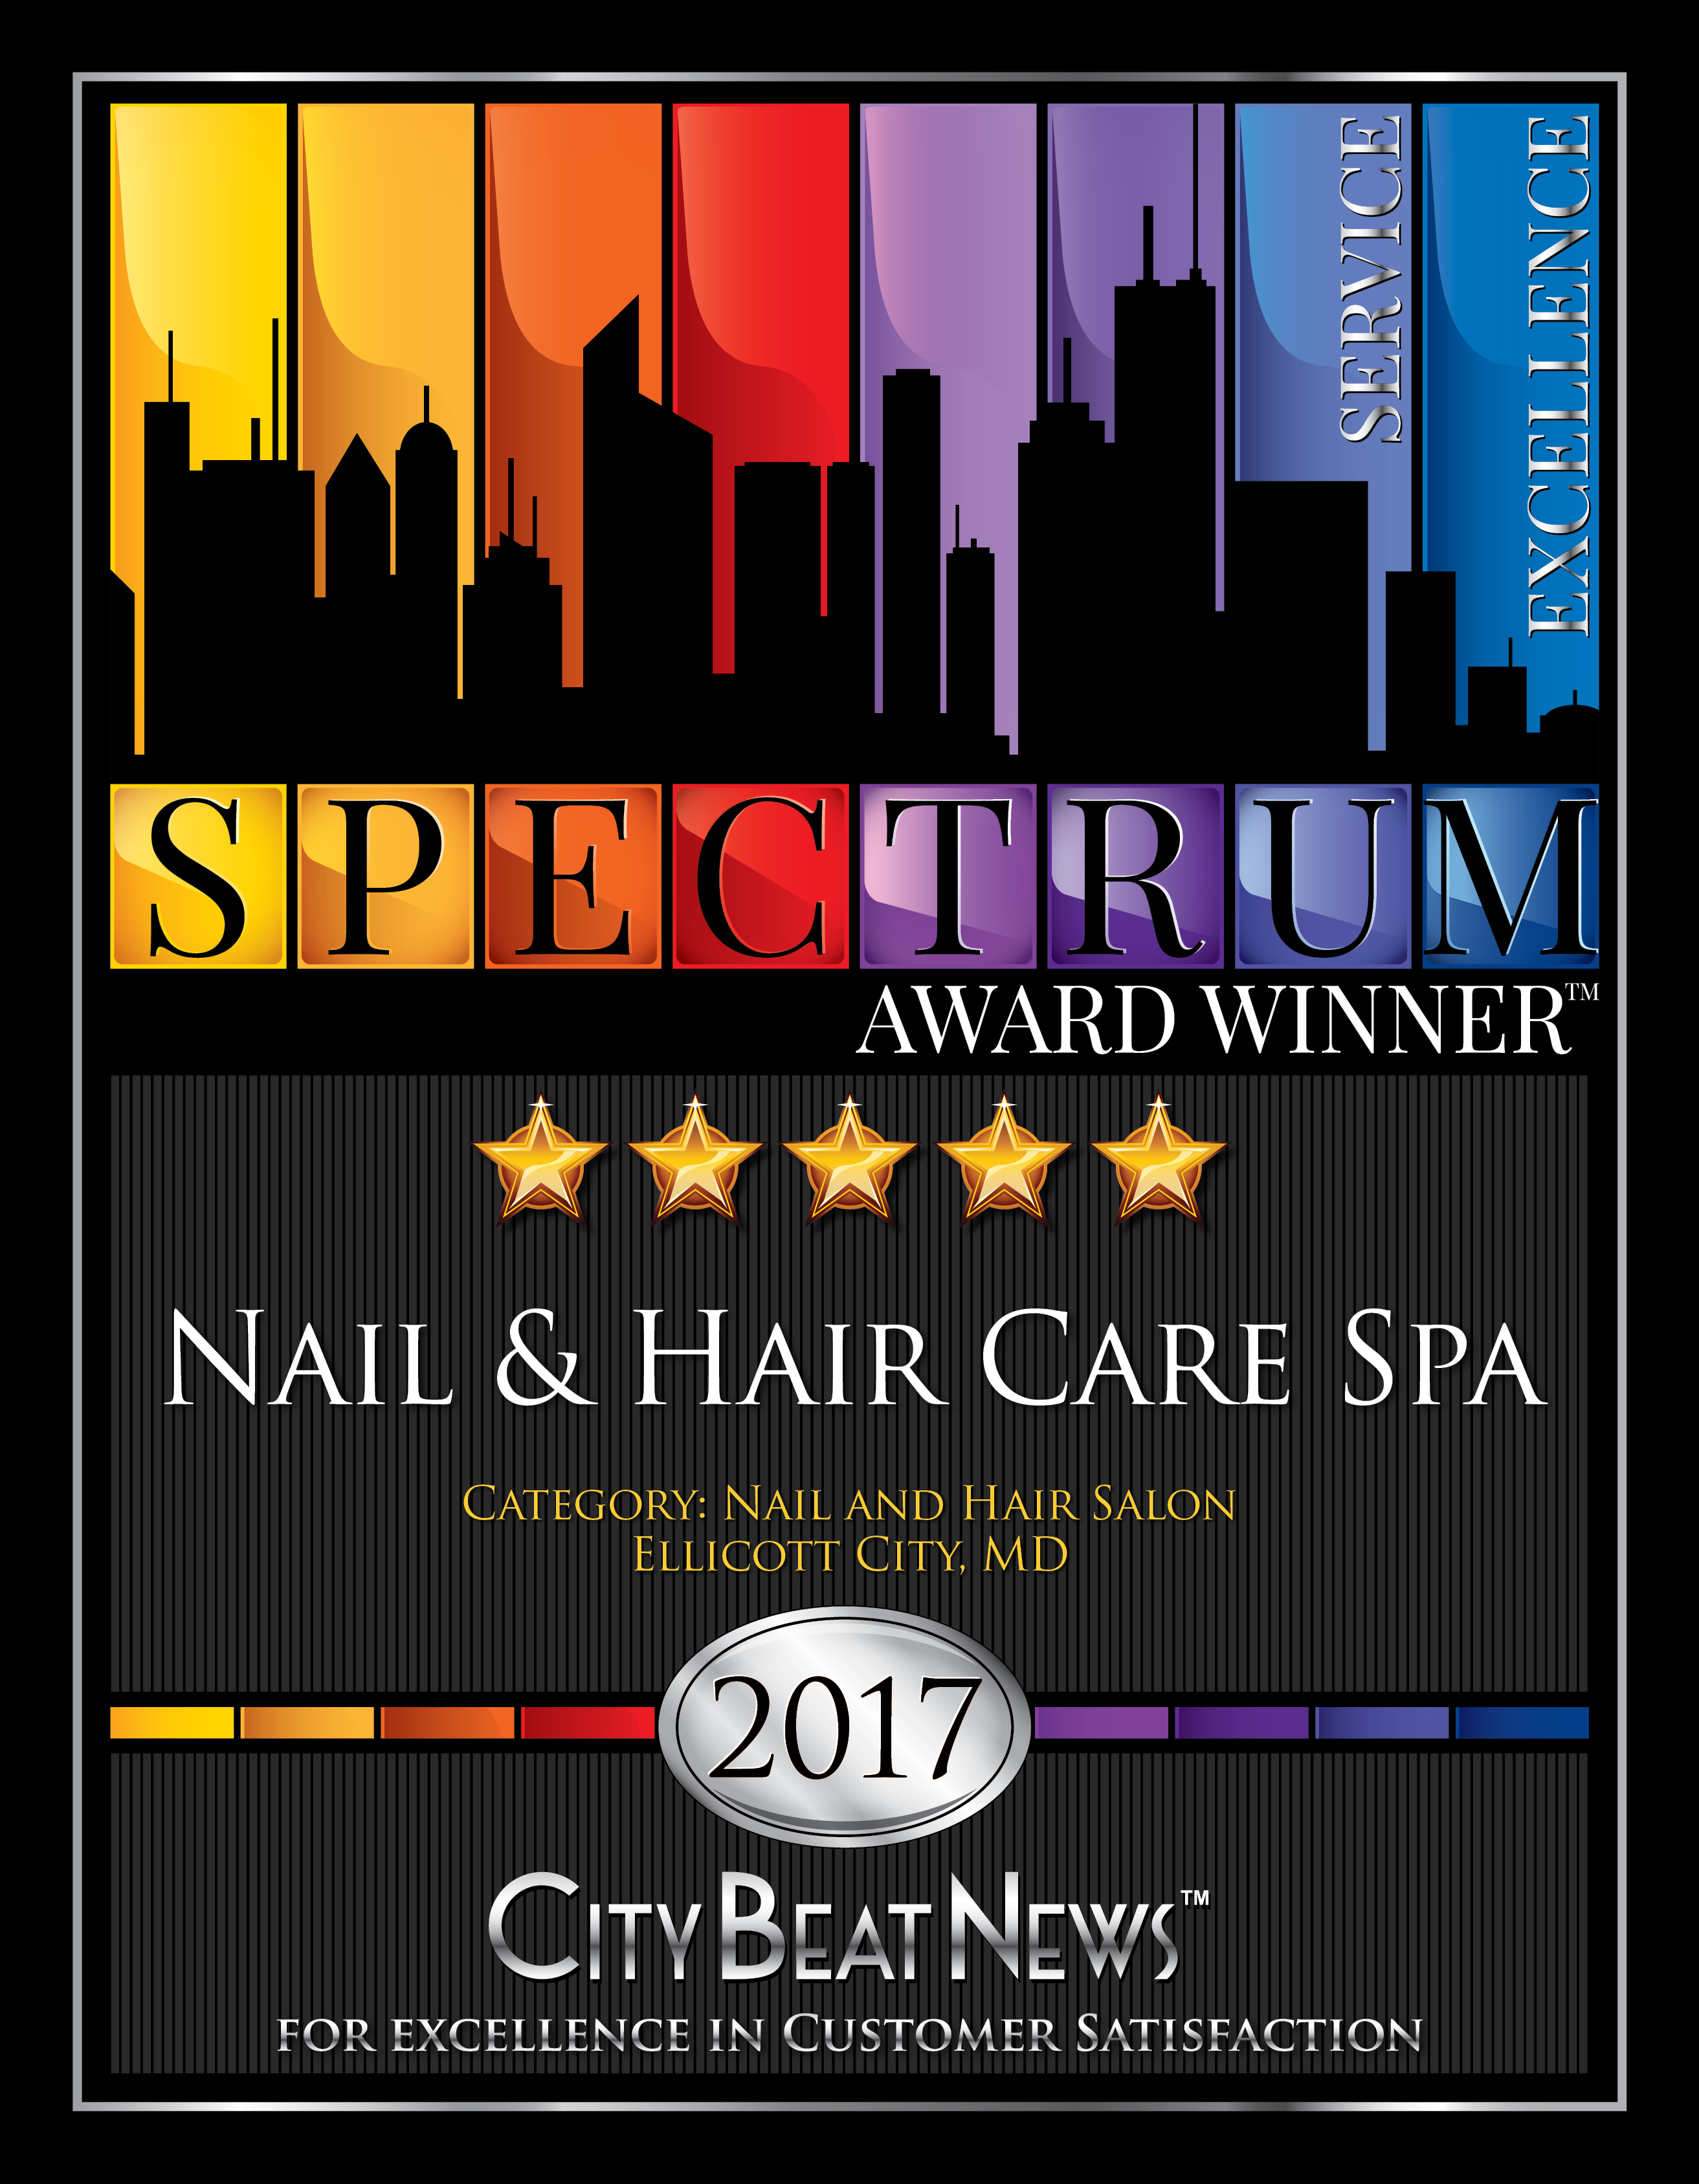 Nail & Hair Care Spa Spectrum Award